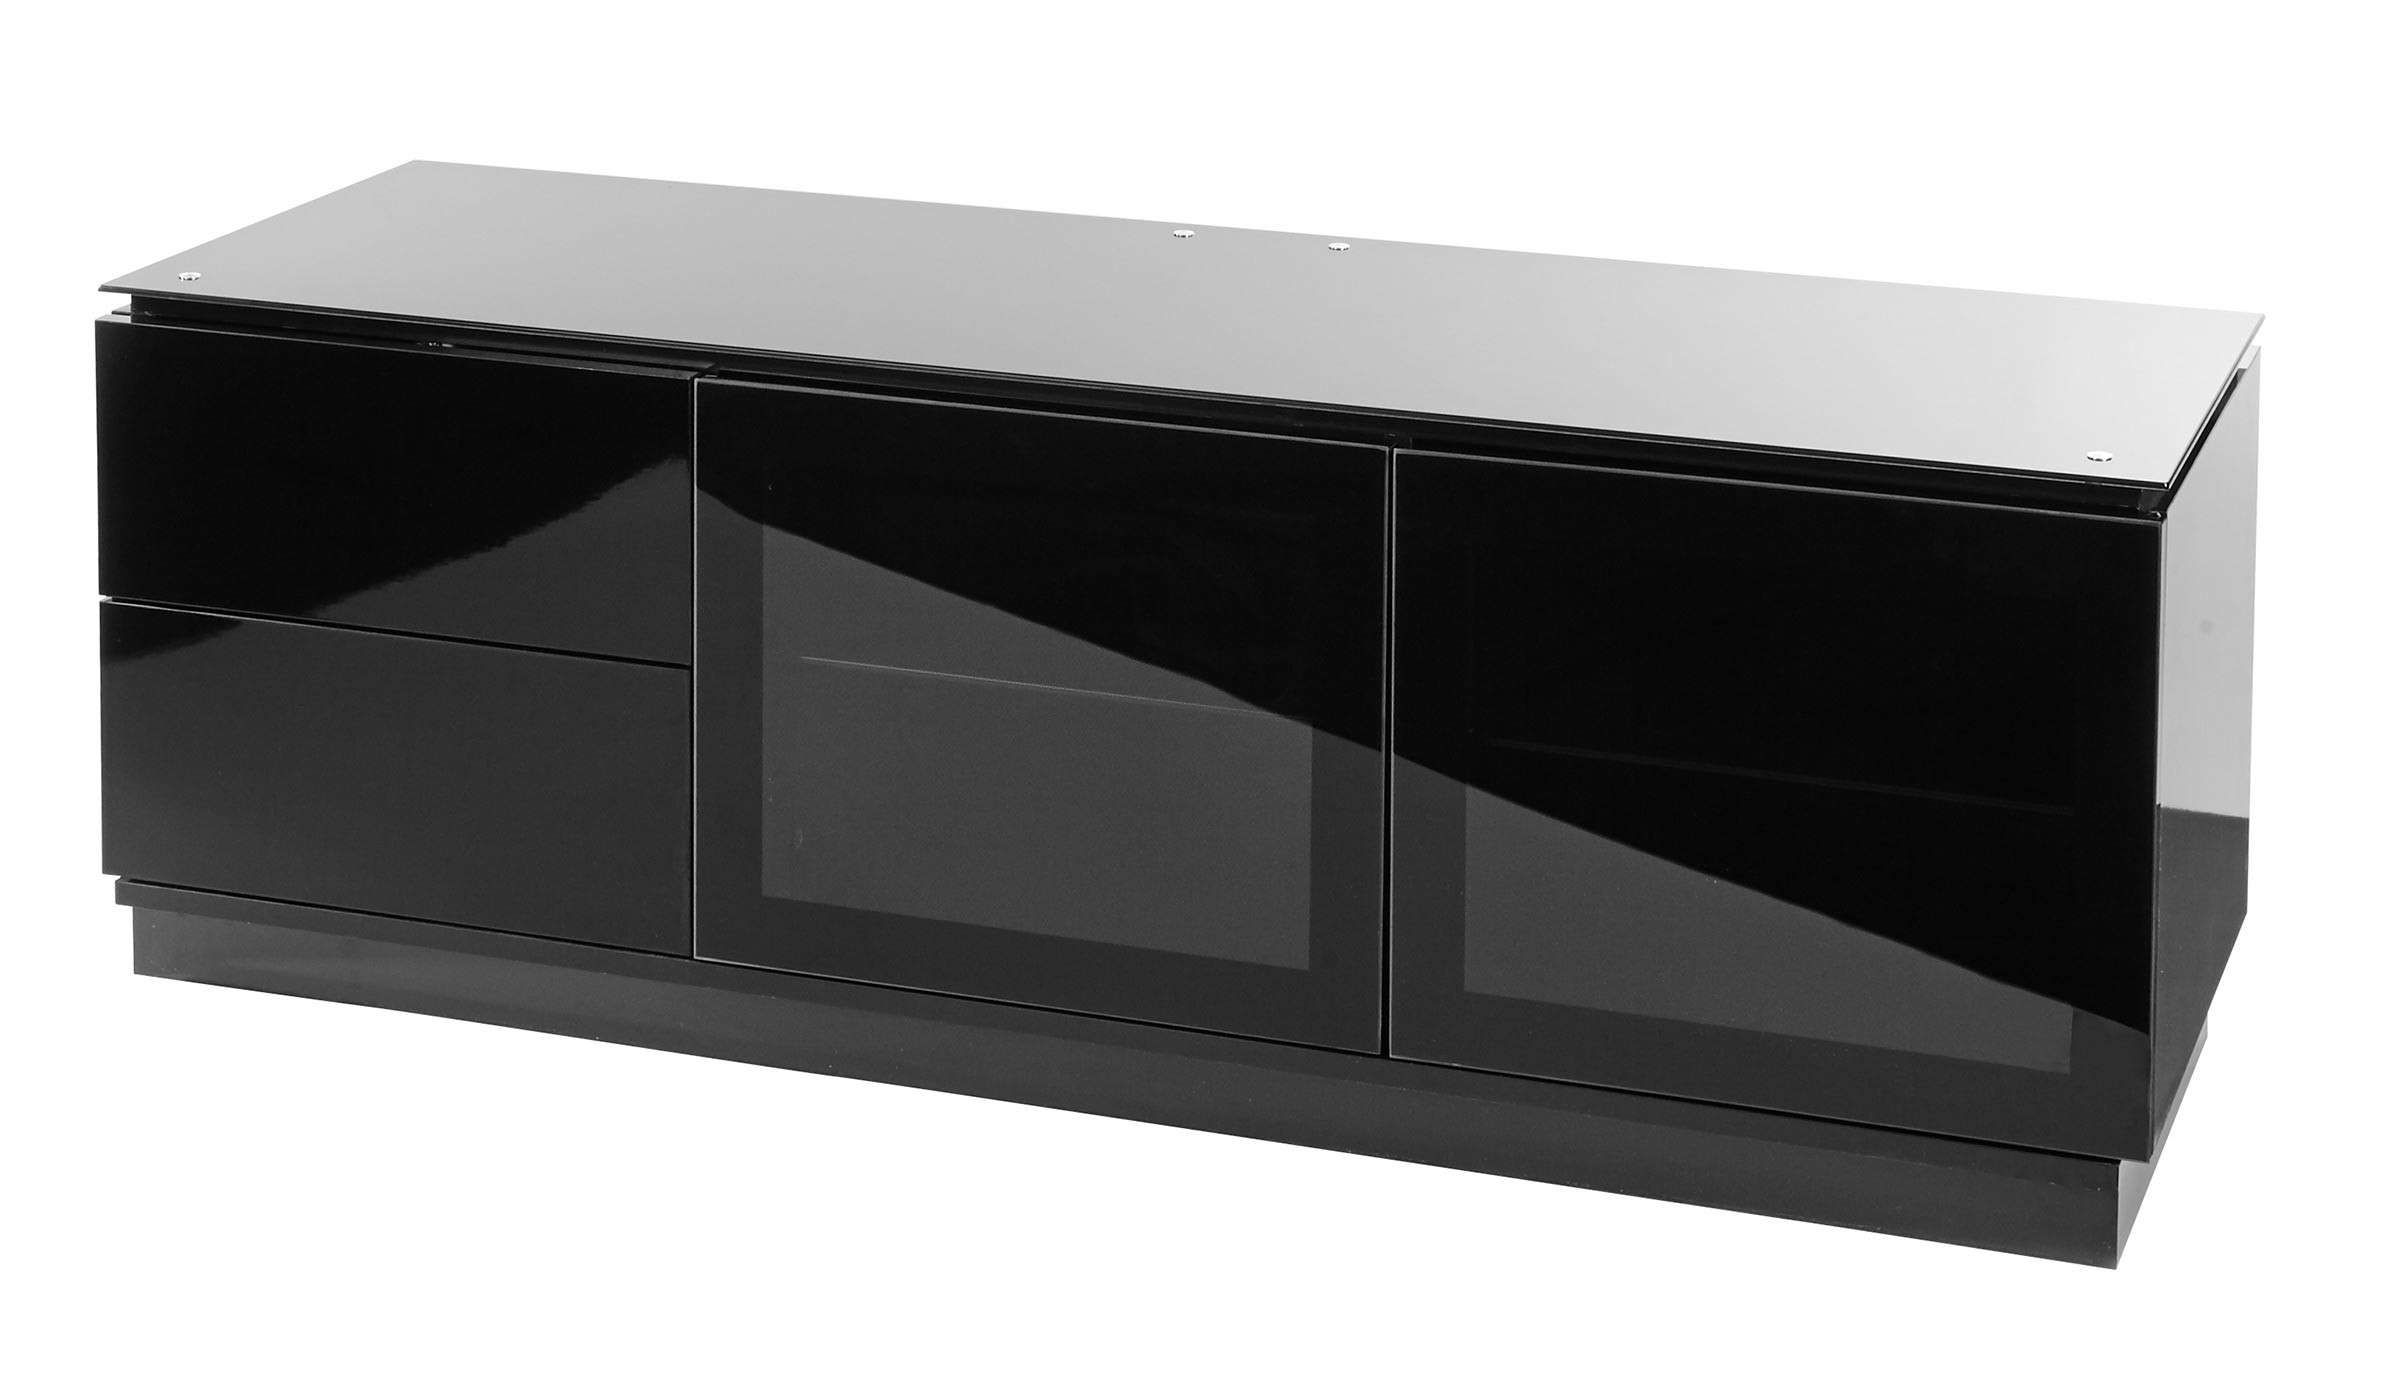 Black Gloss Tv Cabinet Up To 65" Tv | Casino Mmt C1500b Intended For Black Gloss Tv Cabinets (View 2 of 20)